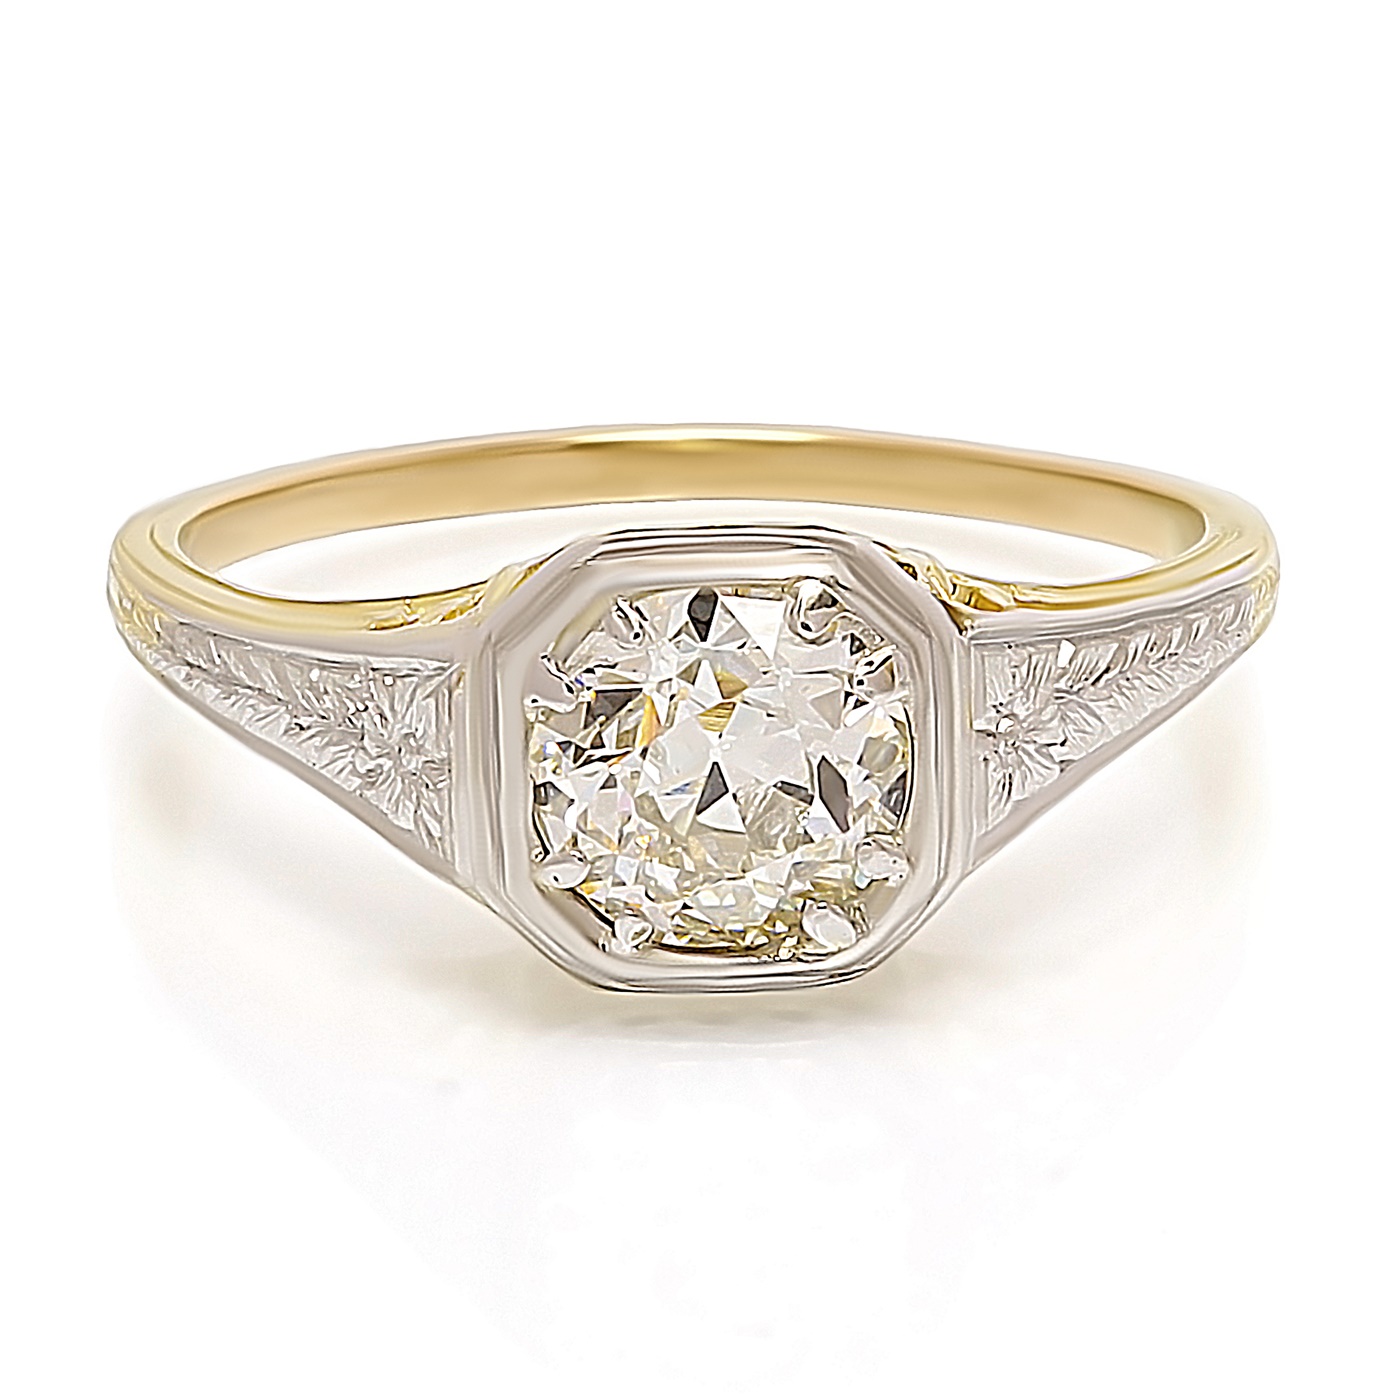 Vintage diamond engagement rings uk